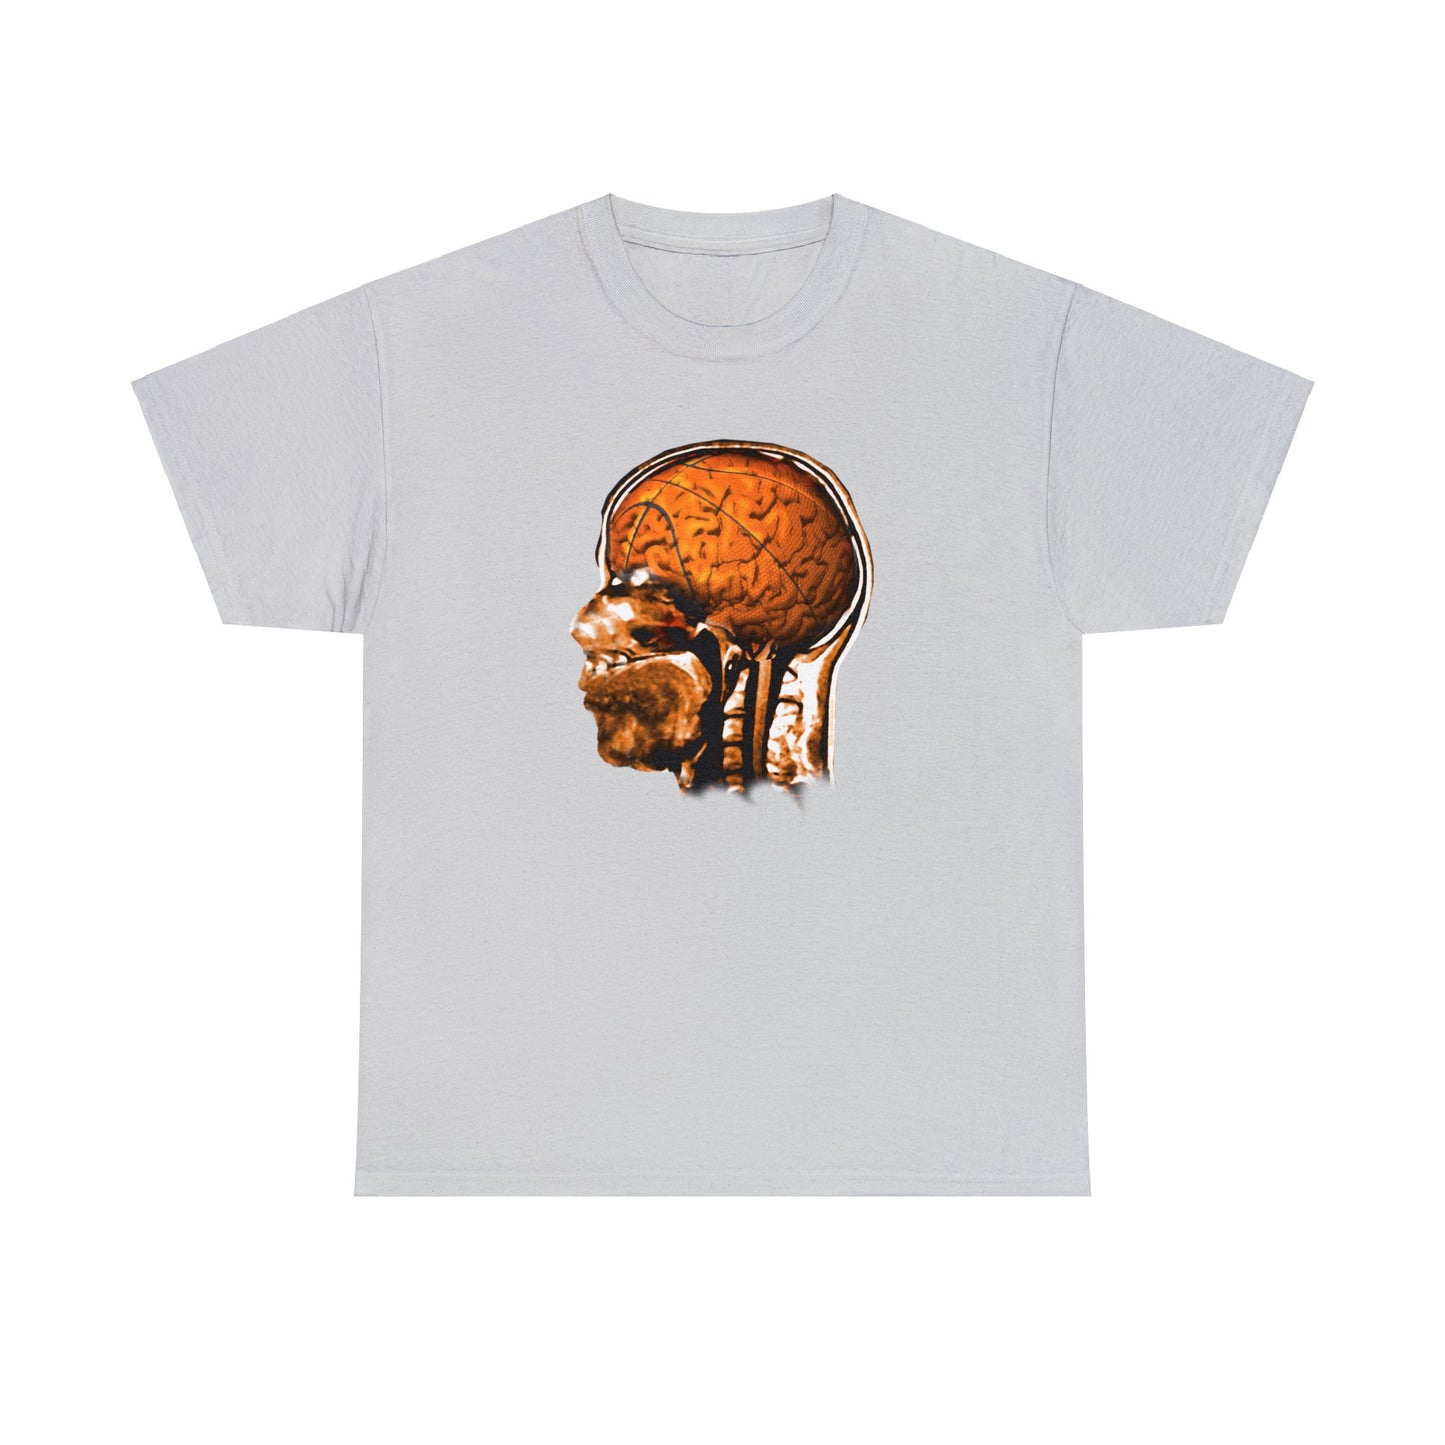 X-Ray Basketball, Brain t-shirt, Basketball Brain, Basketball Shirt, Basketball on the brain, Funny Basketball Shirt Gifts For Dads